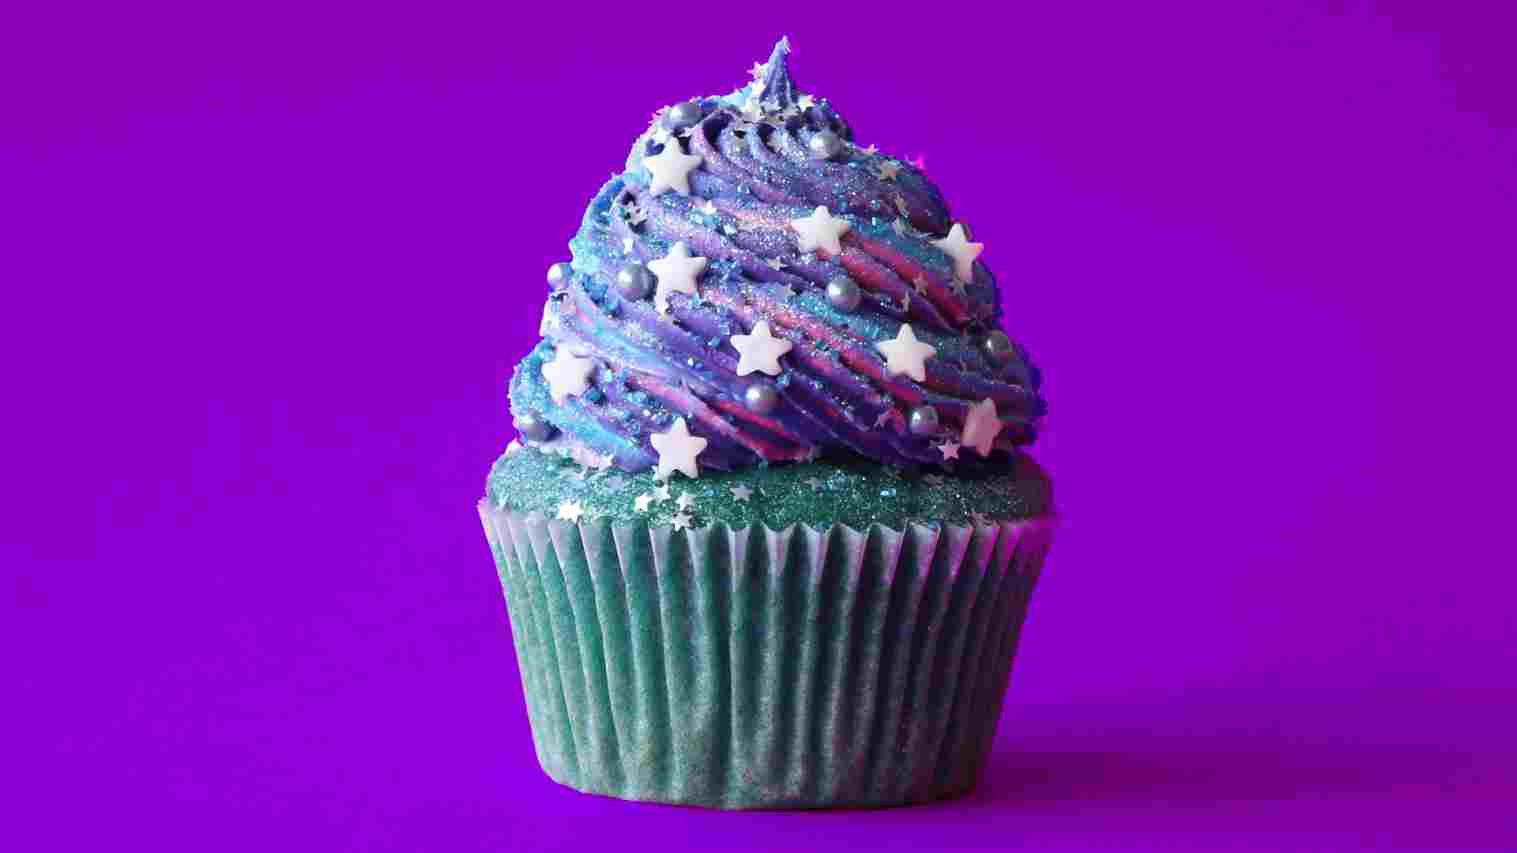 ks壁紙hd,カップケーキ,バタークリーム,アイシング,ケーキ,紫の